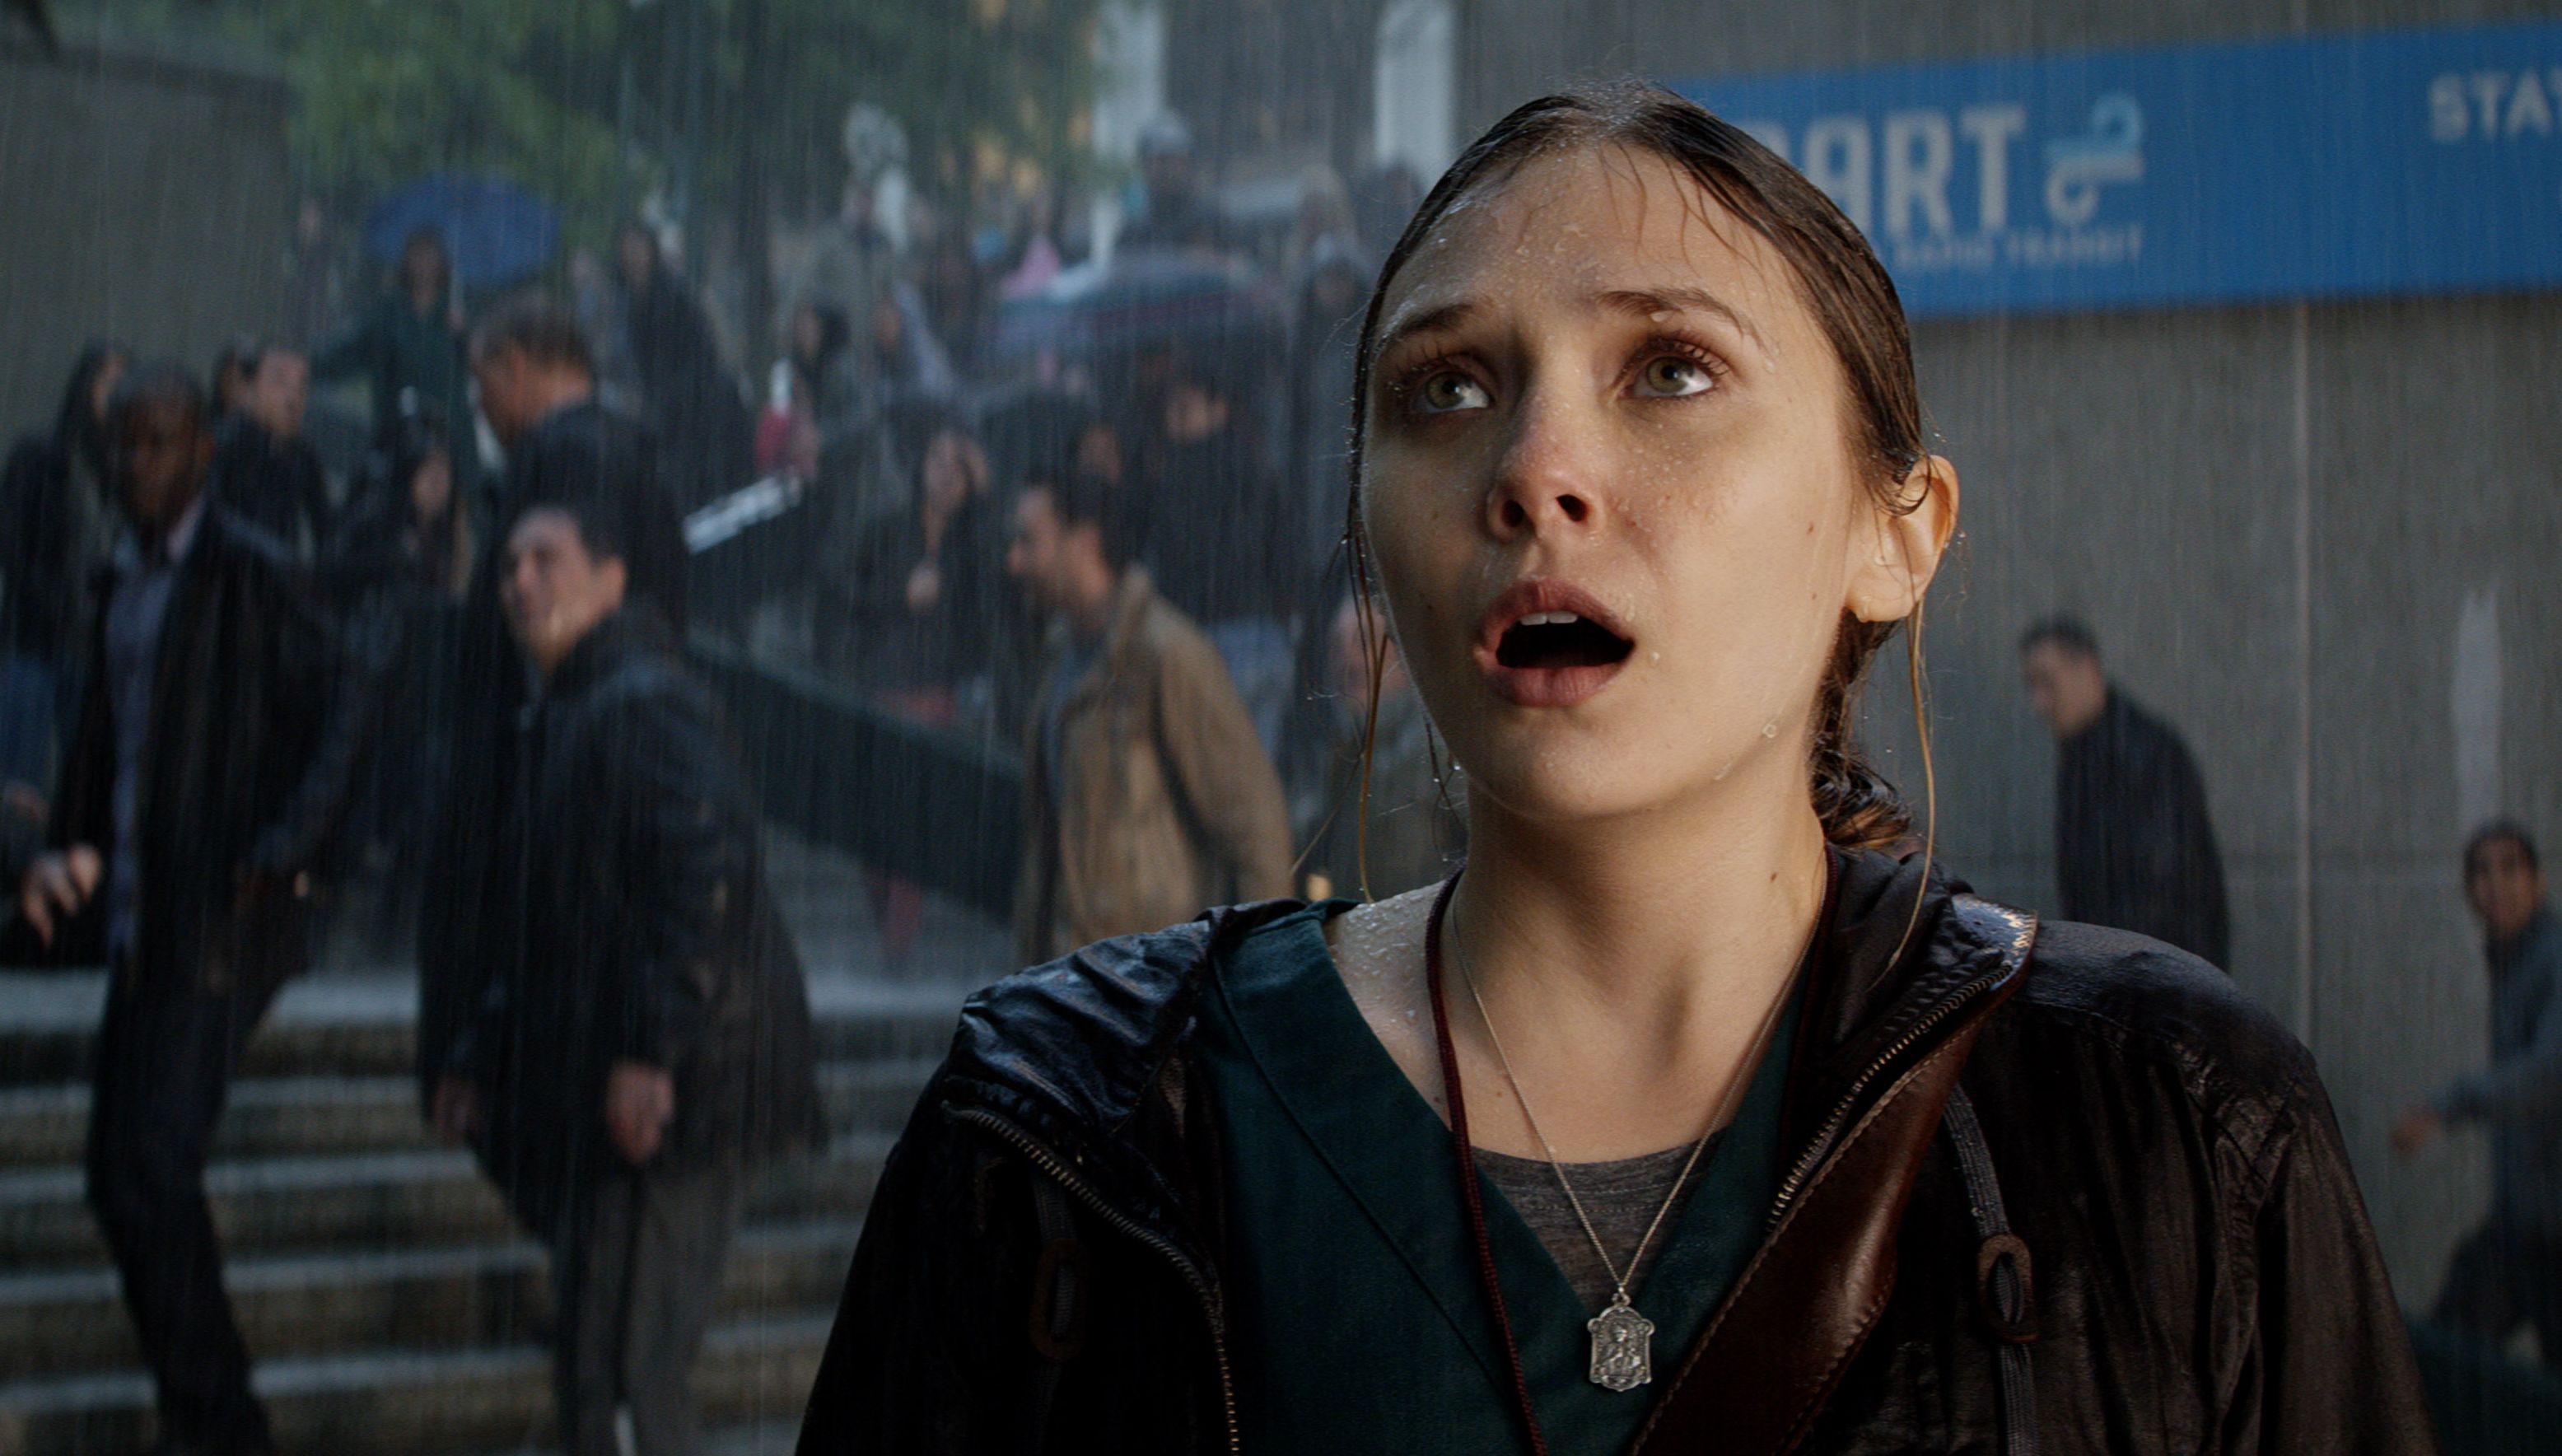 Elizabeth Olsen sees Godzilla in the rain